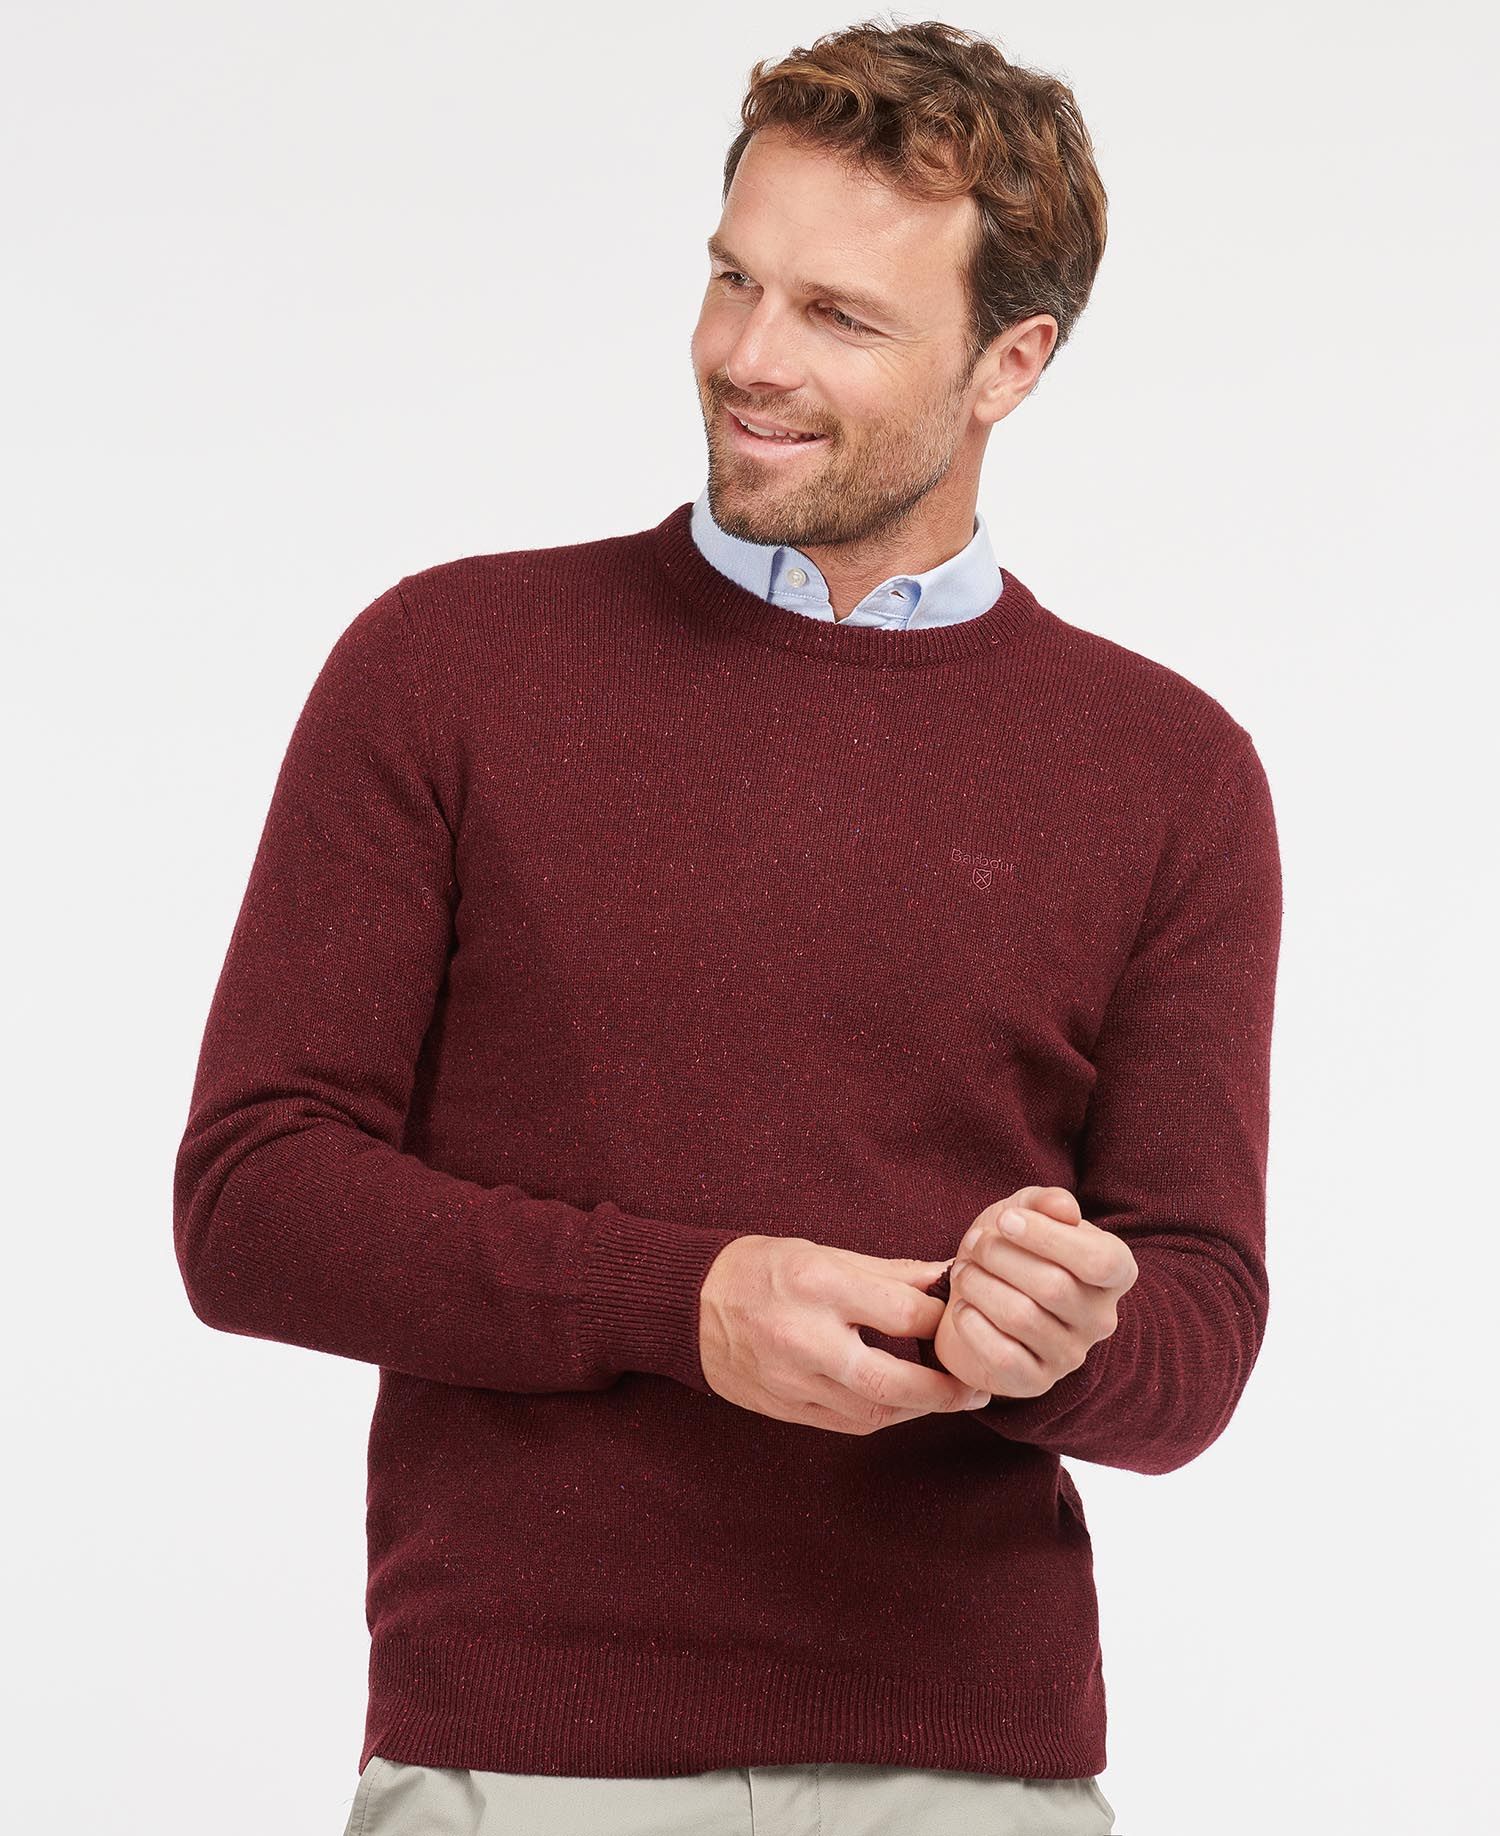 Barbour Tisbury Crew Sweater - Ruby